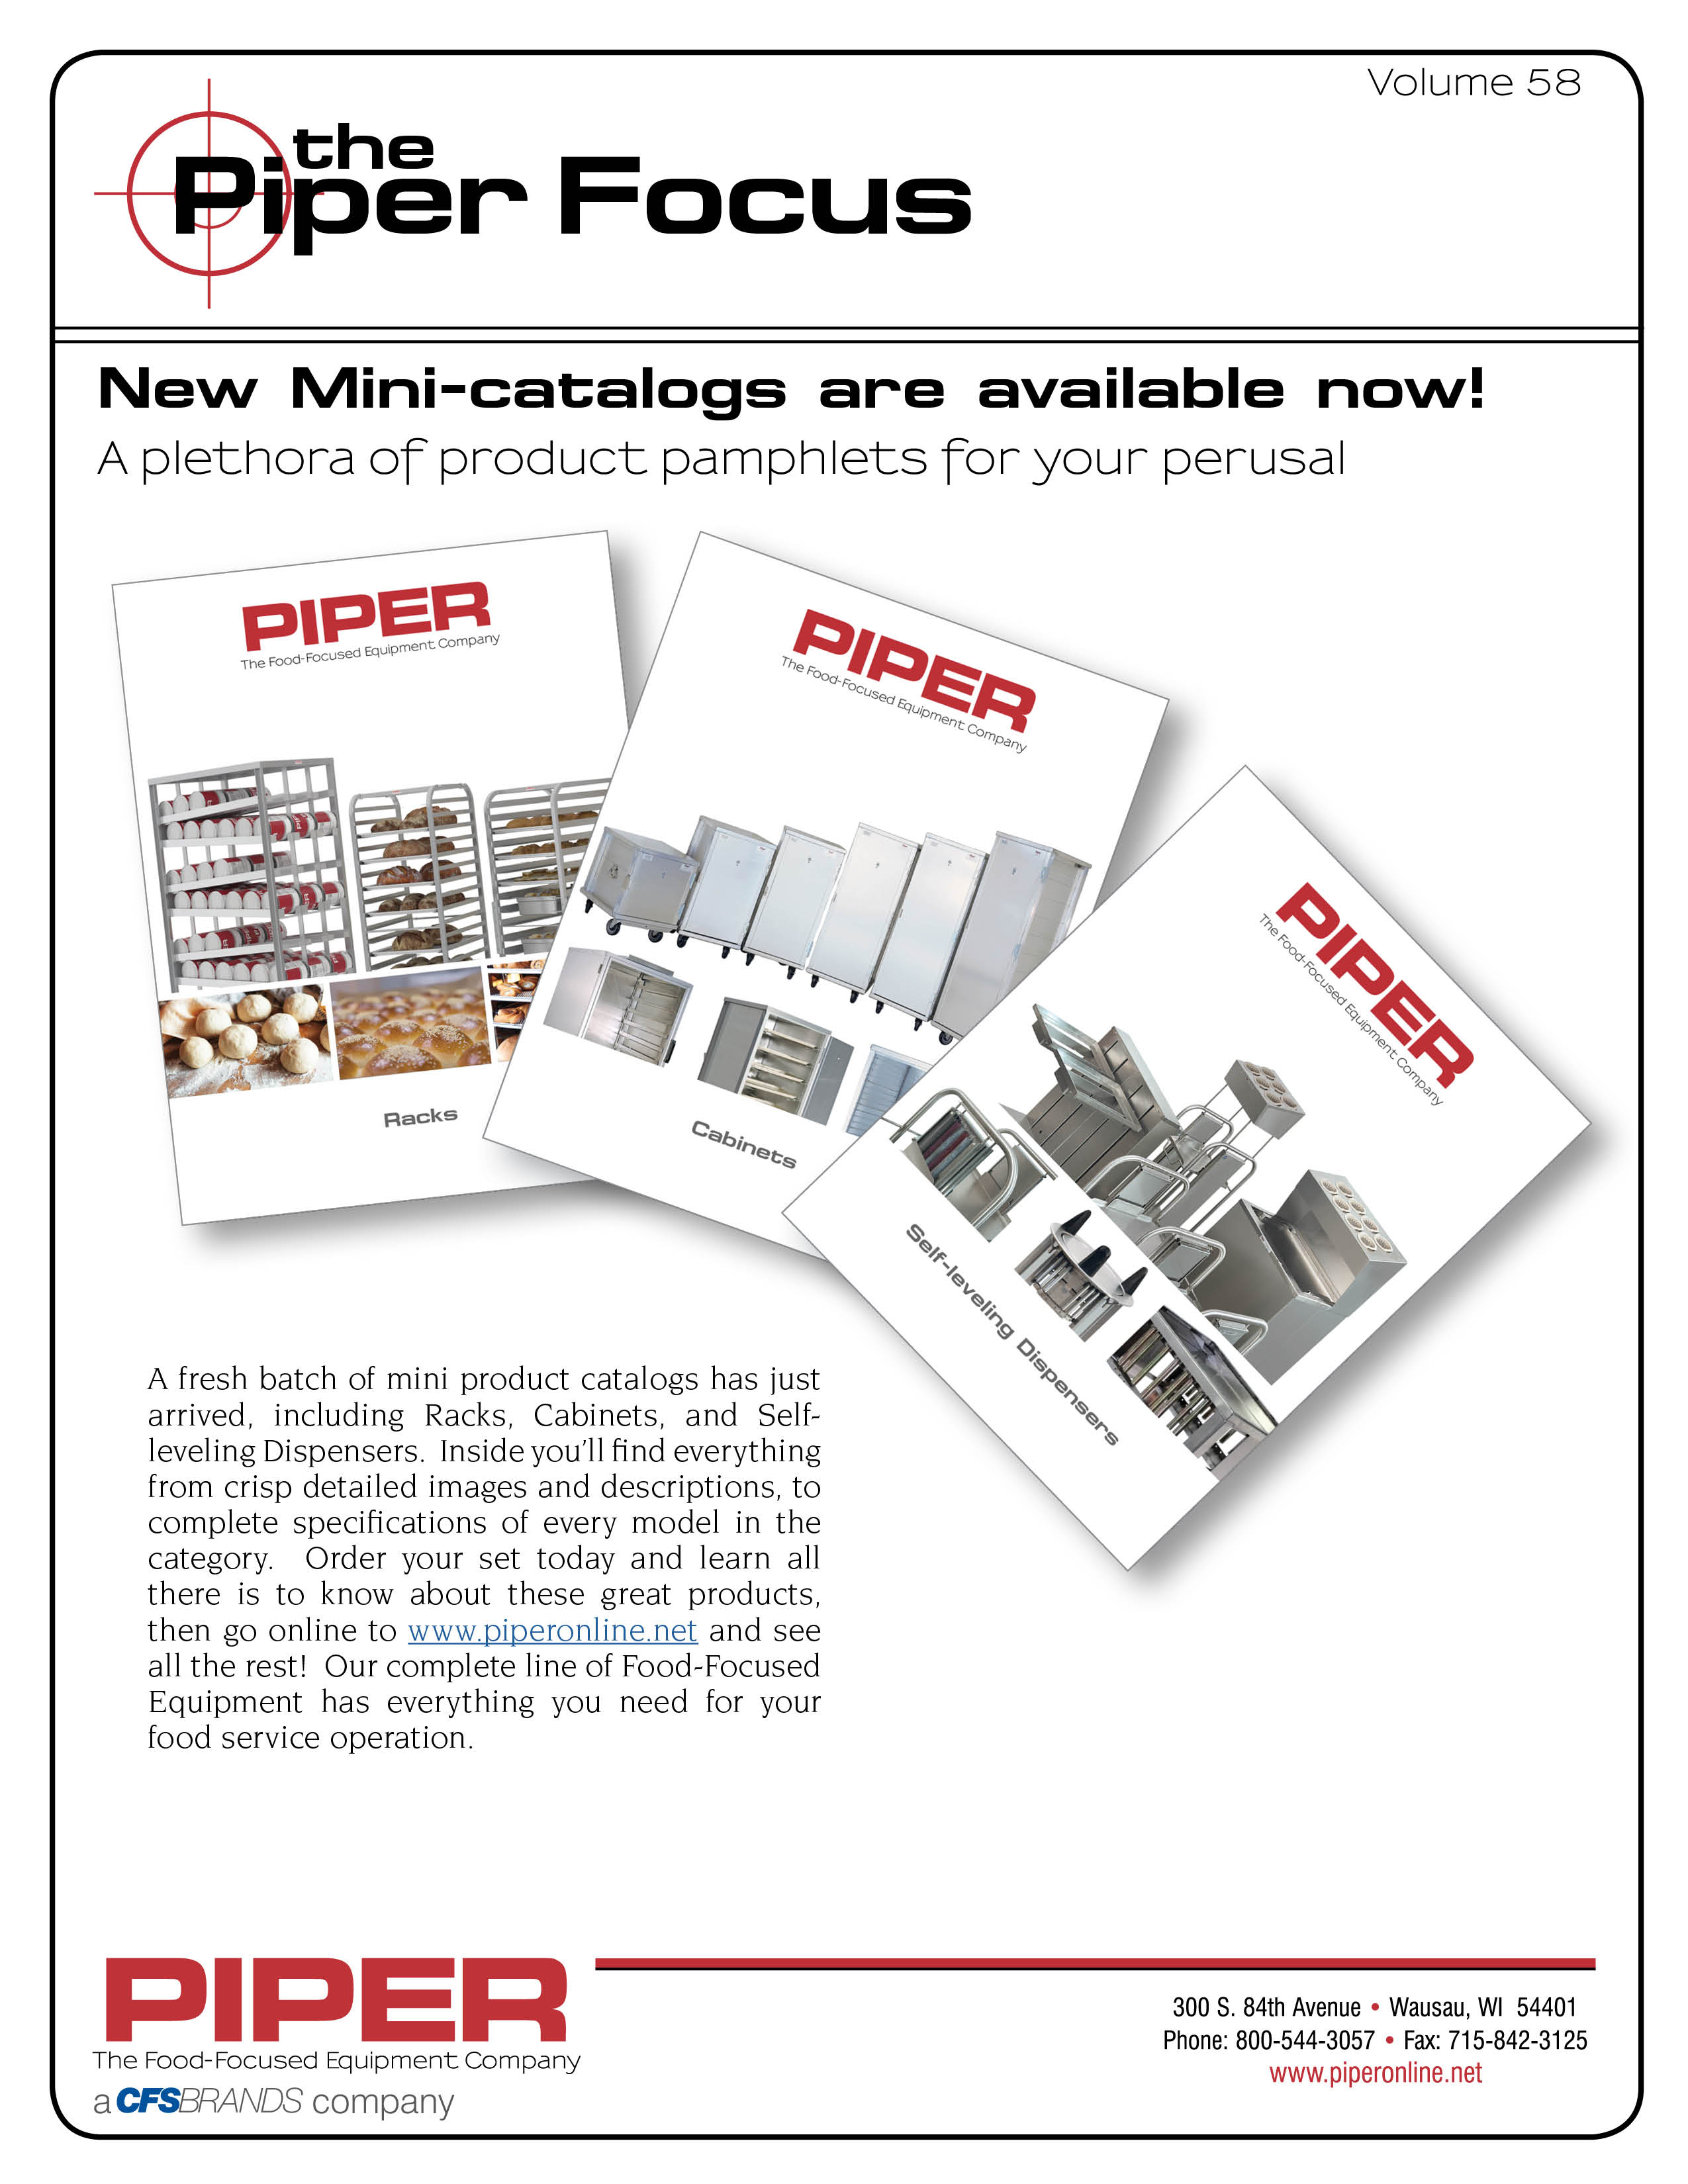 Piper Focus Vol.58 - New Mini-Catalogs